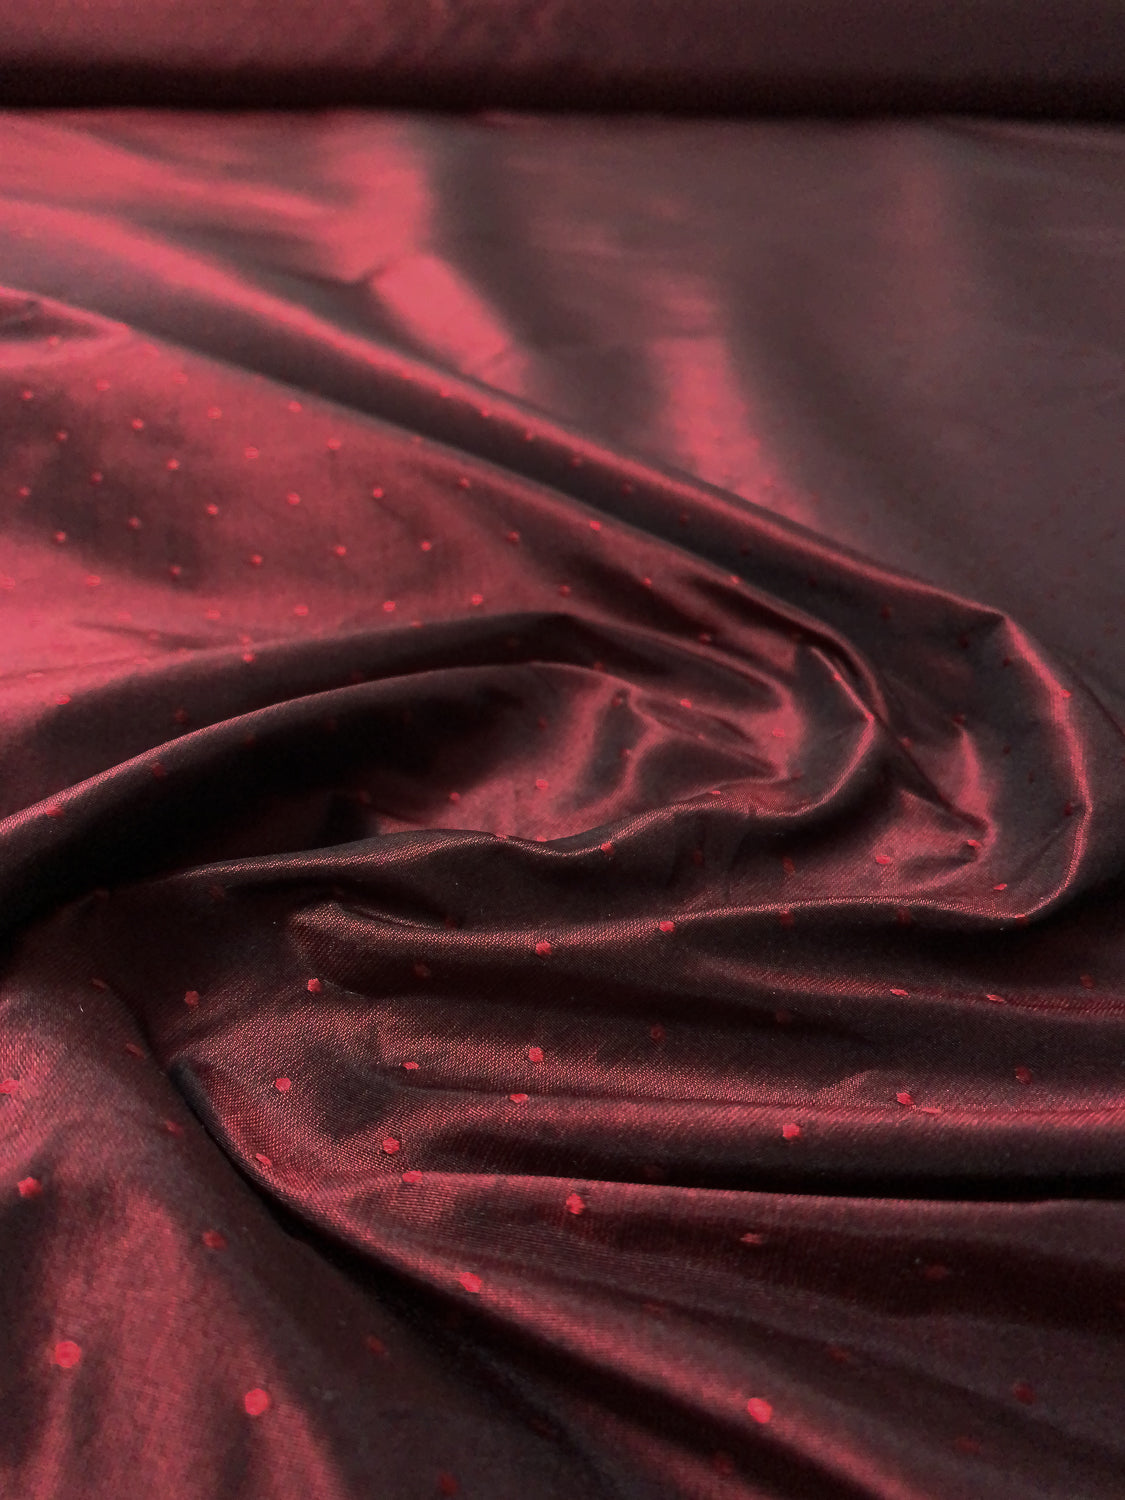 Yarn-Dyed Iridescent Silk Taffeta with Pin Dot Pattern - Wine Red / Black